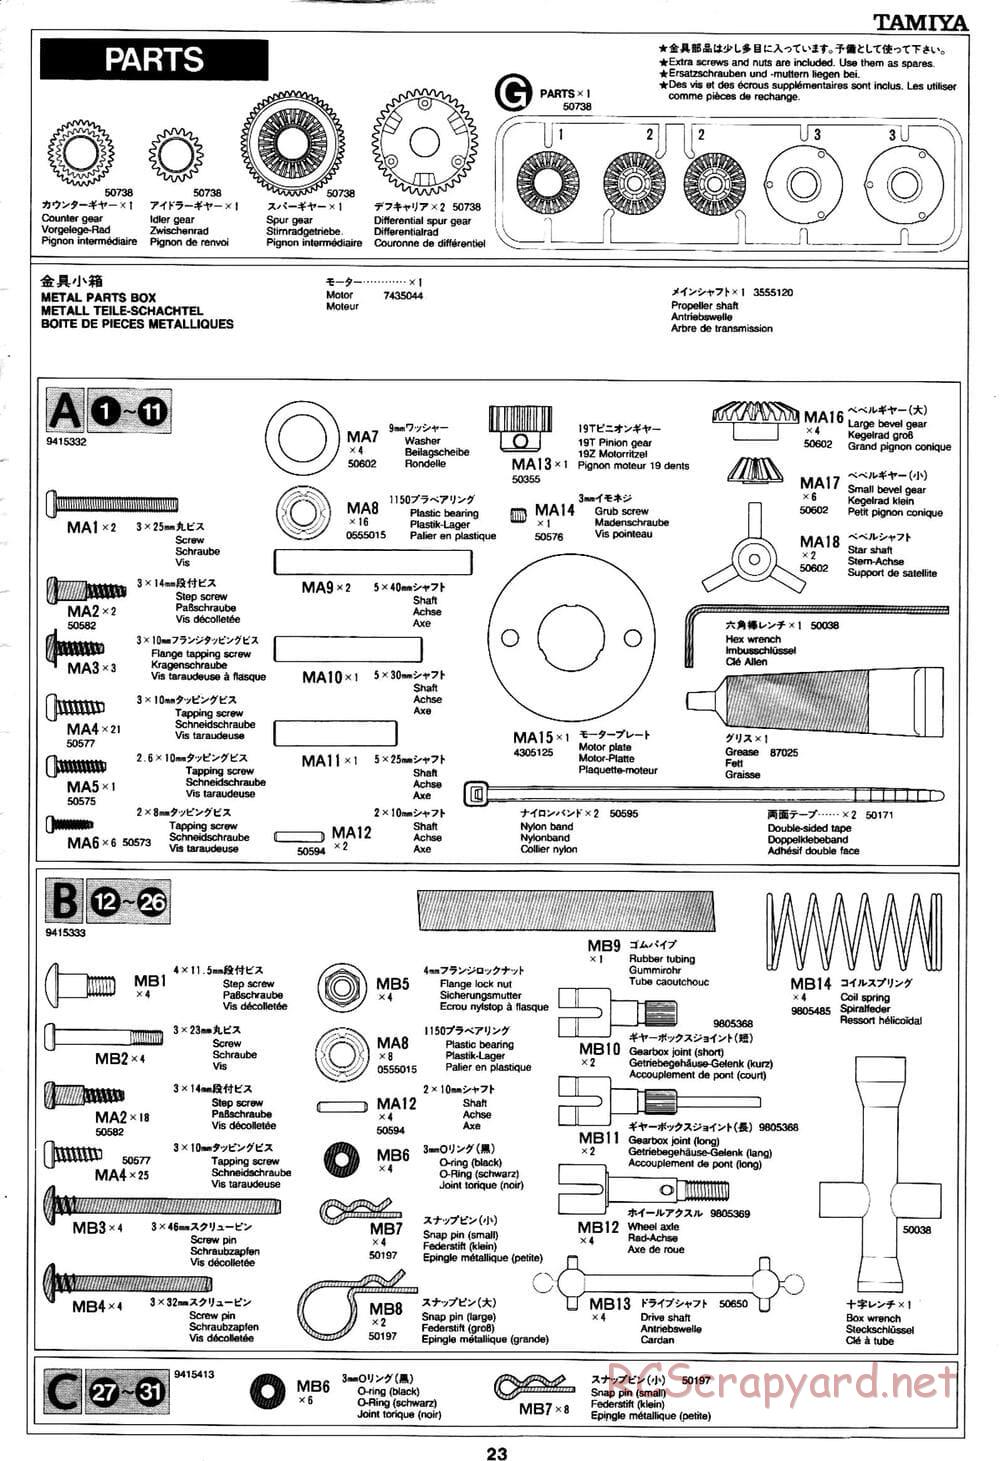 Tamiya - Peugeot 406 ST - TL-01 Chassis - Manual - Page 23